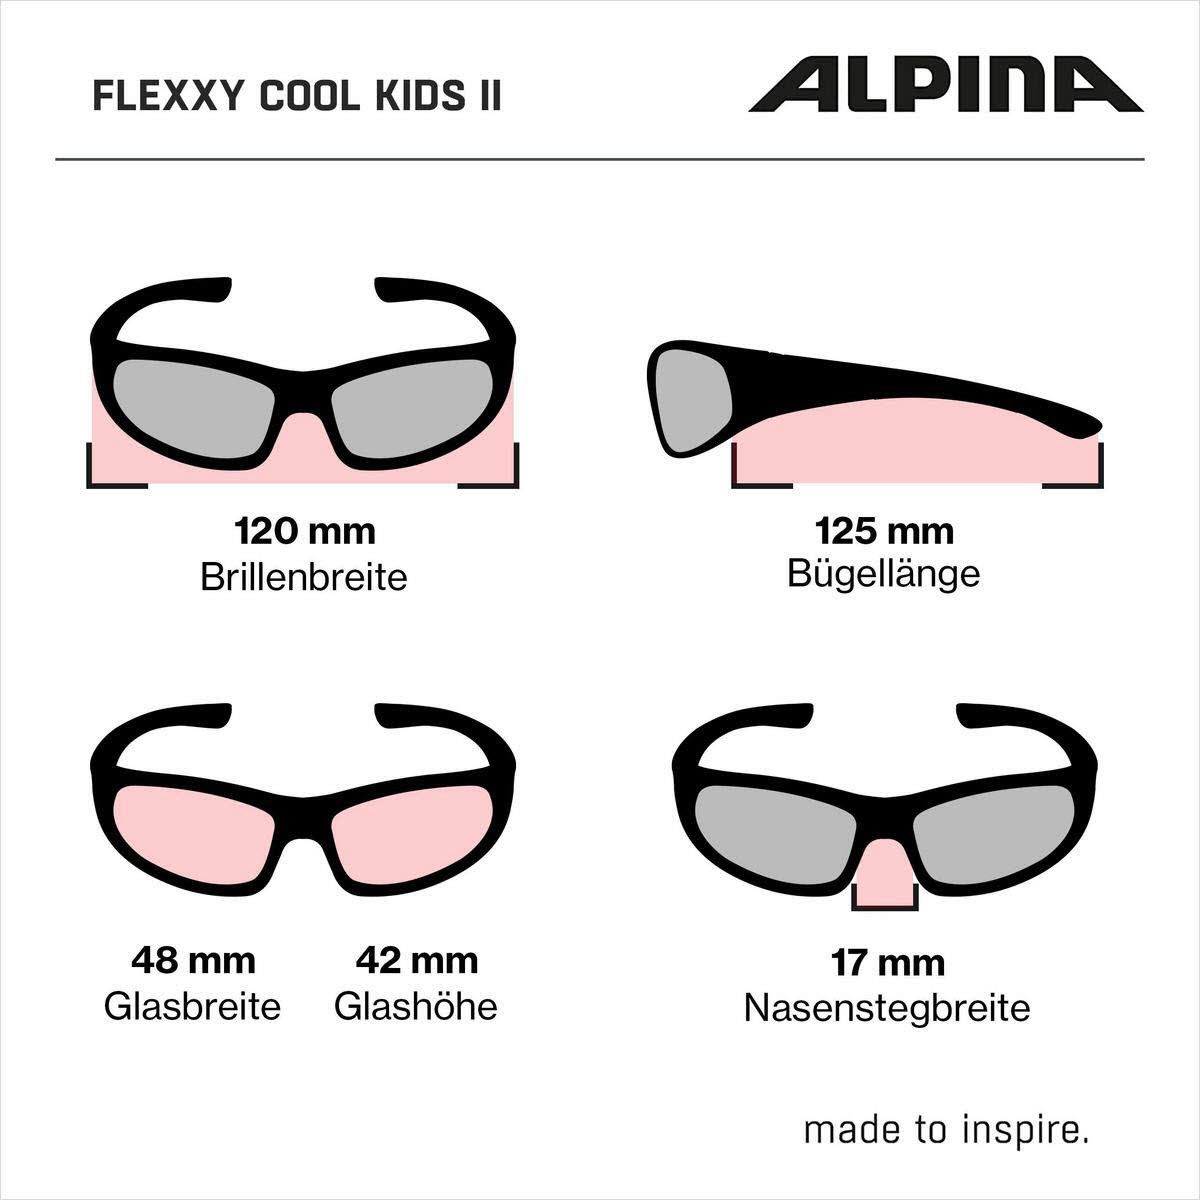 Alpina Flexxy Cool Kids II